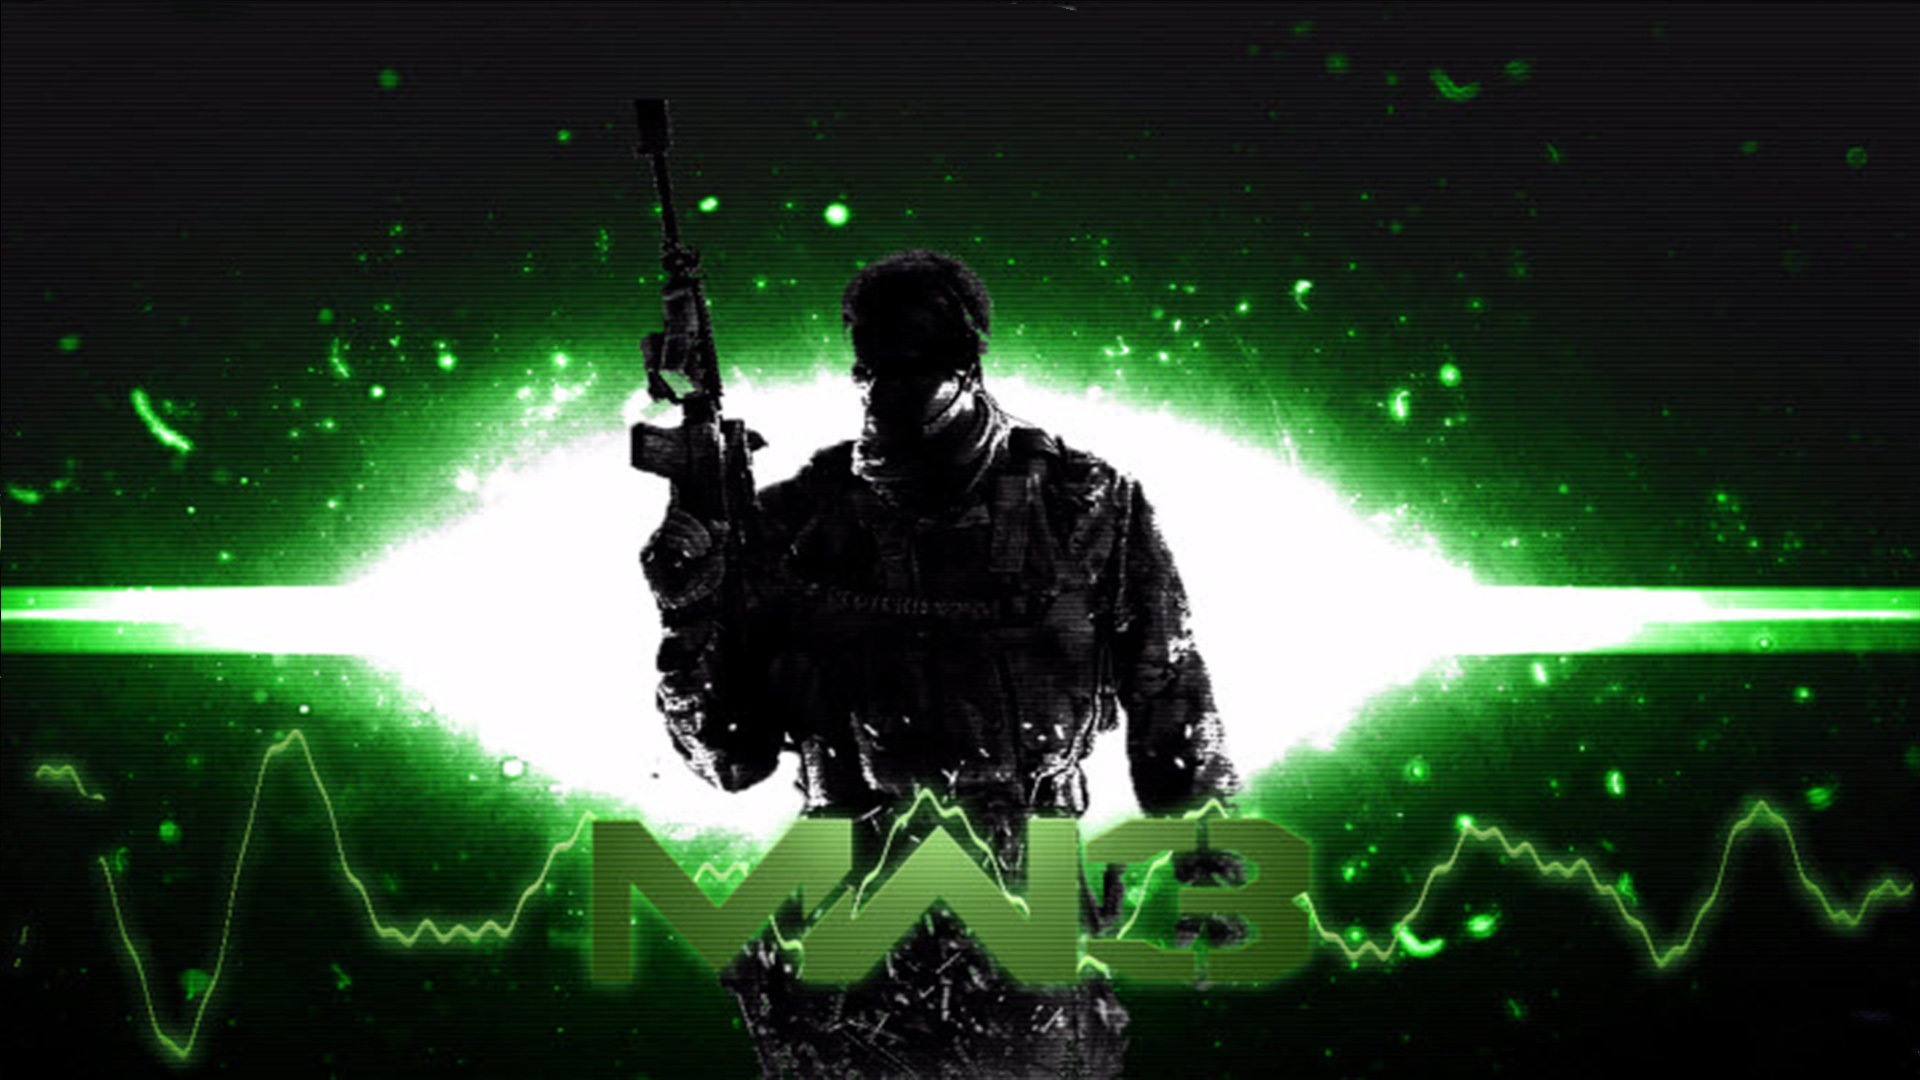 Call of Duty: Modern Warfare 3 Wallpapers